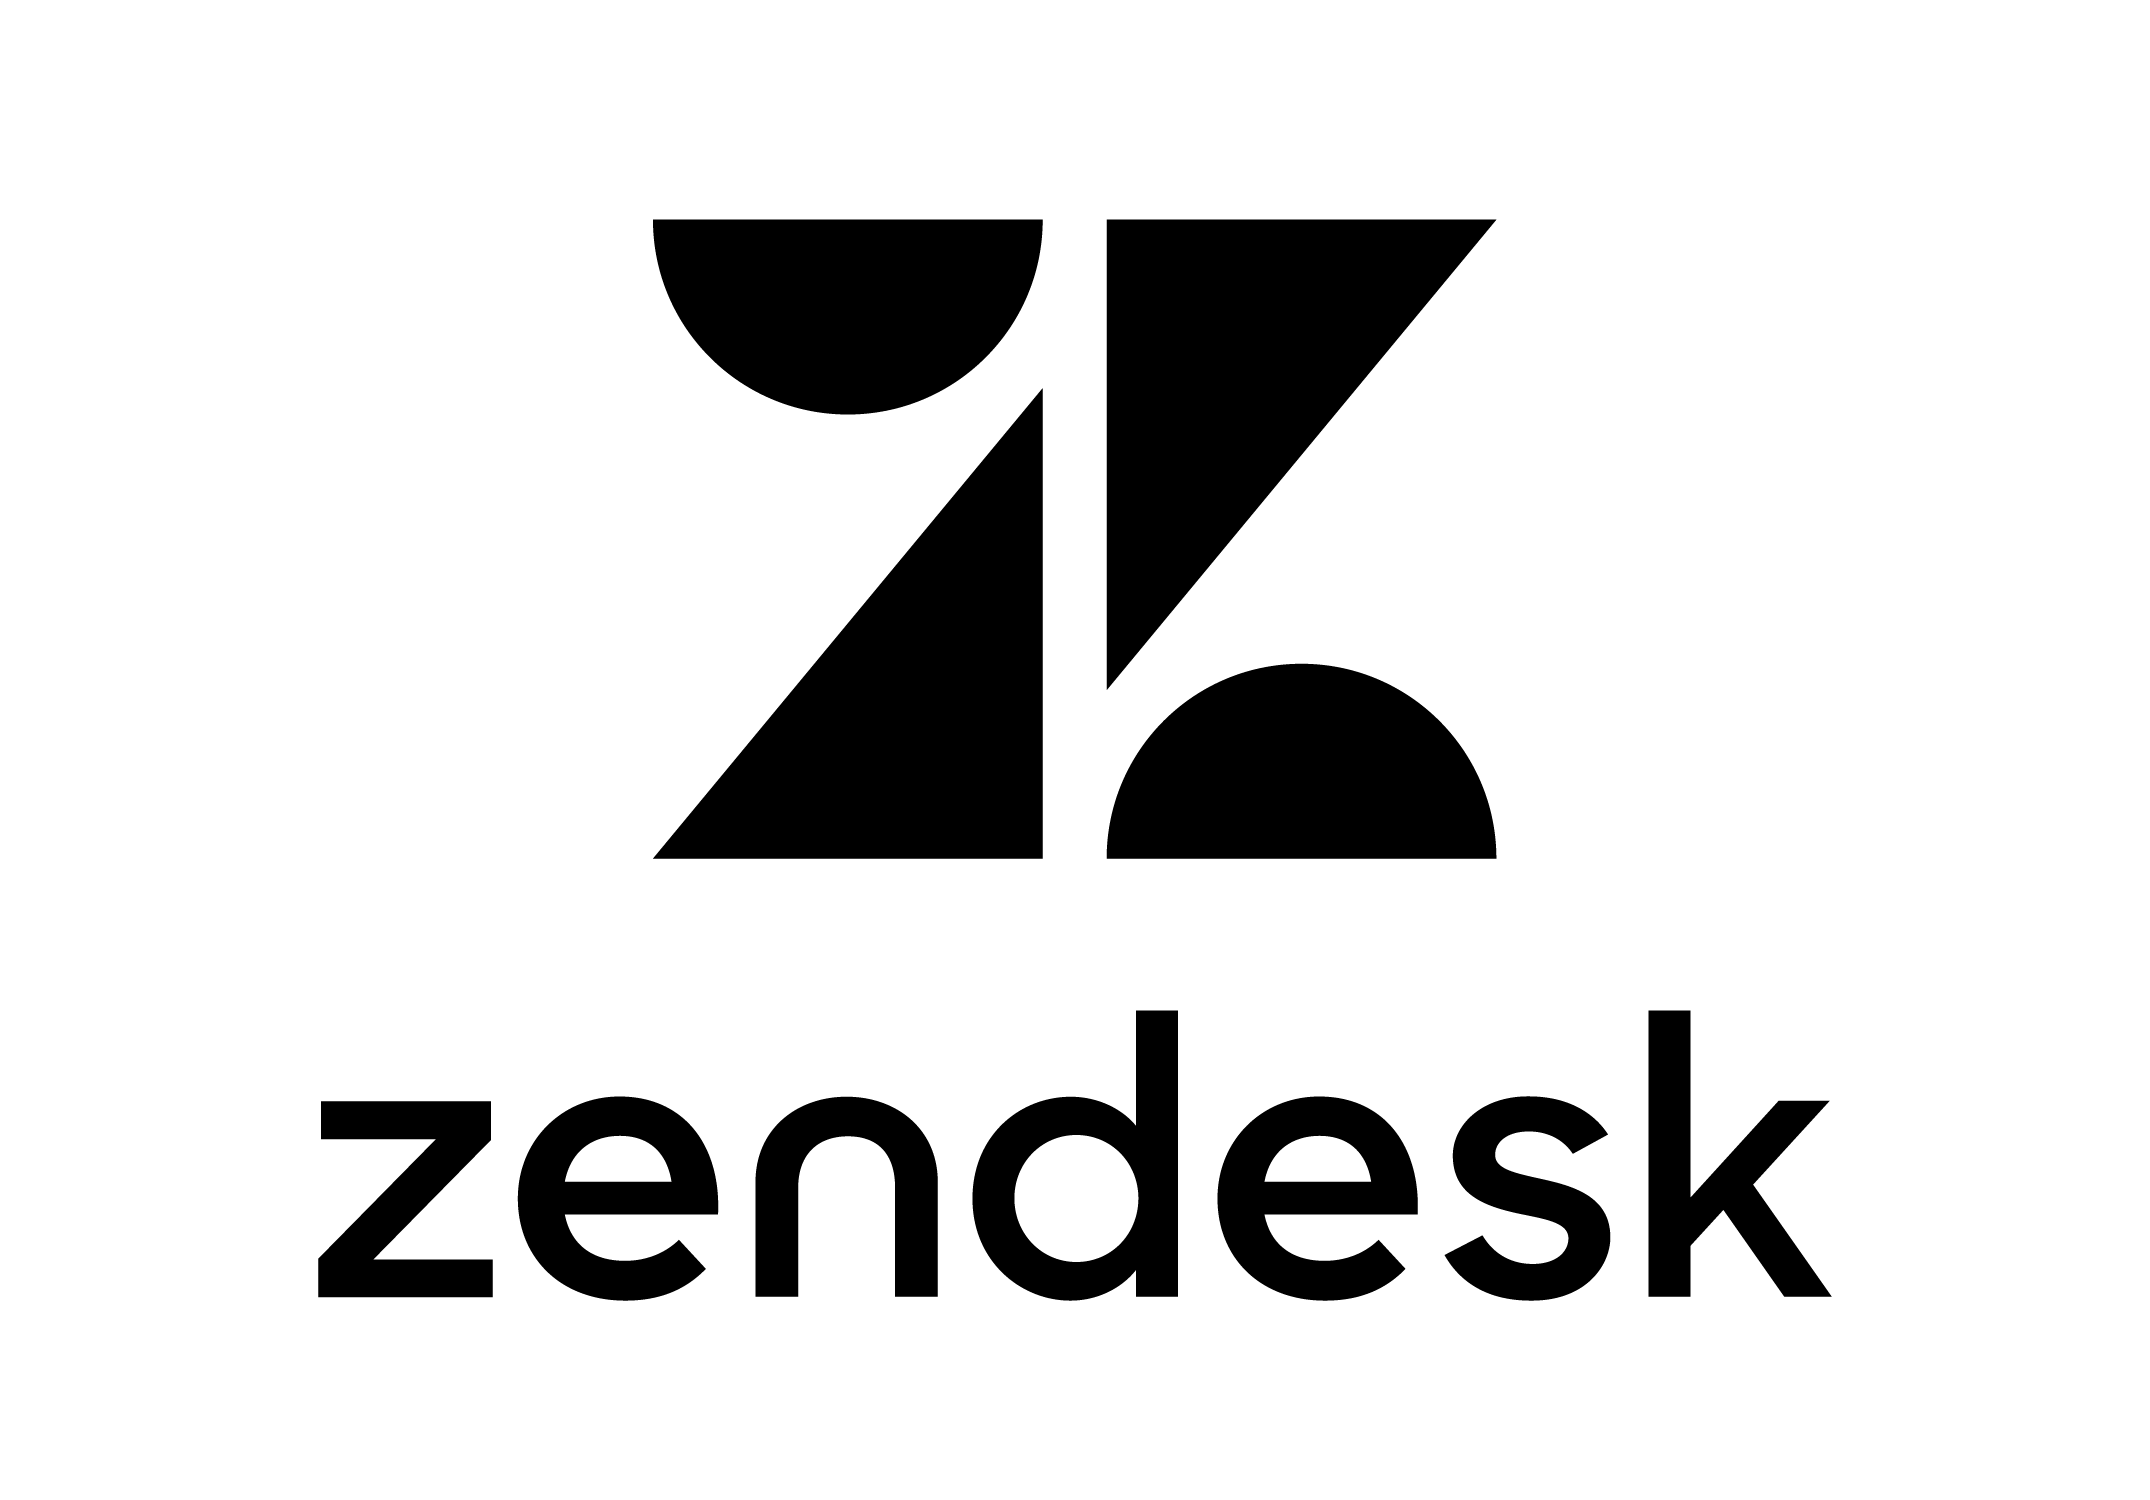 Zendesk Support is a beautifu